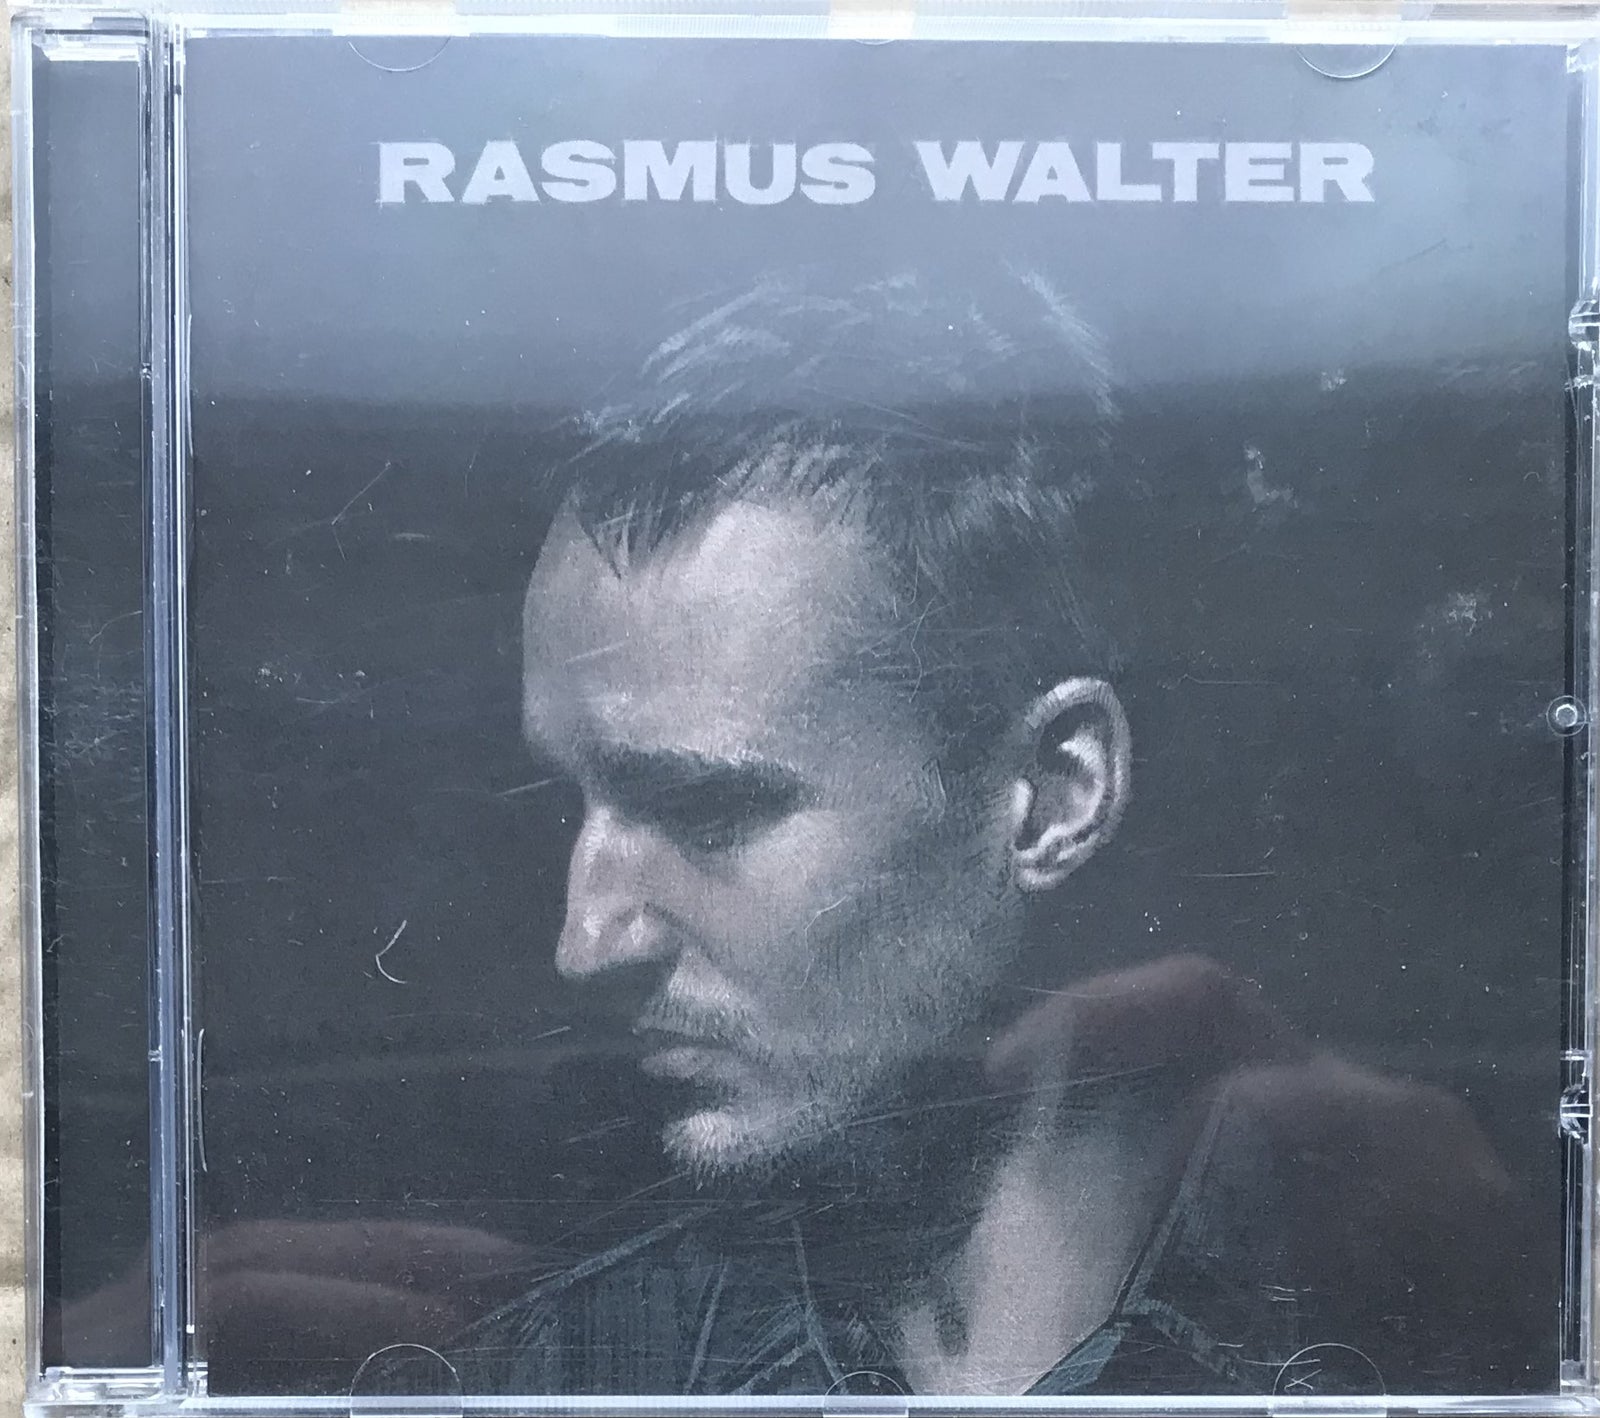 Rasmus Walter: Rasmus Walter, rock